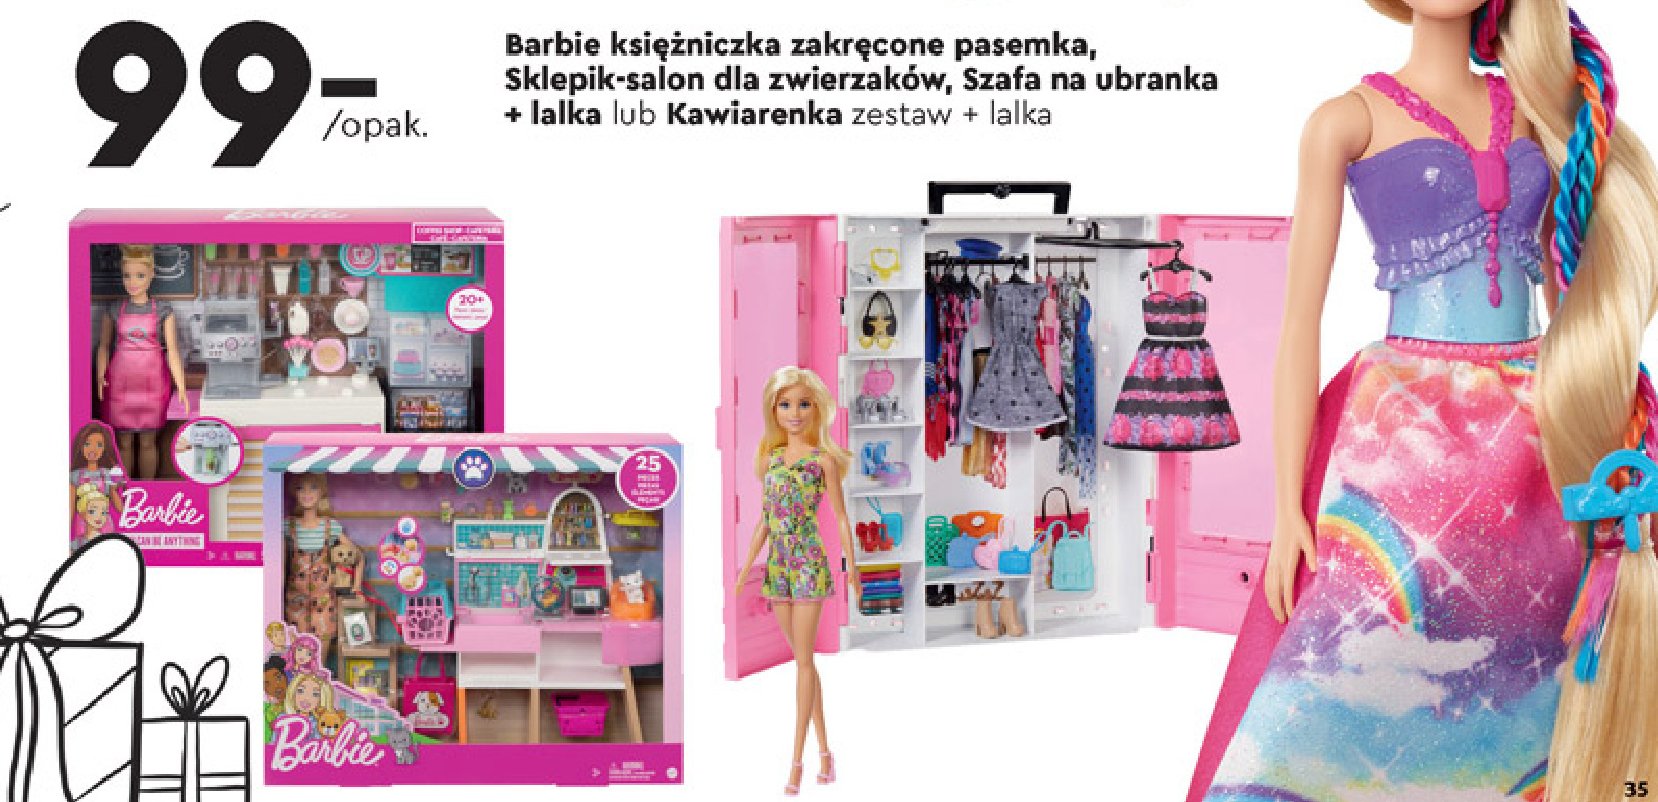 Szafa na ubrania + lalka Barbie promocja